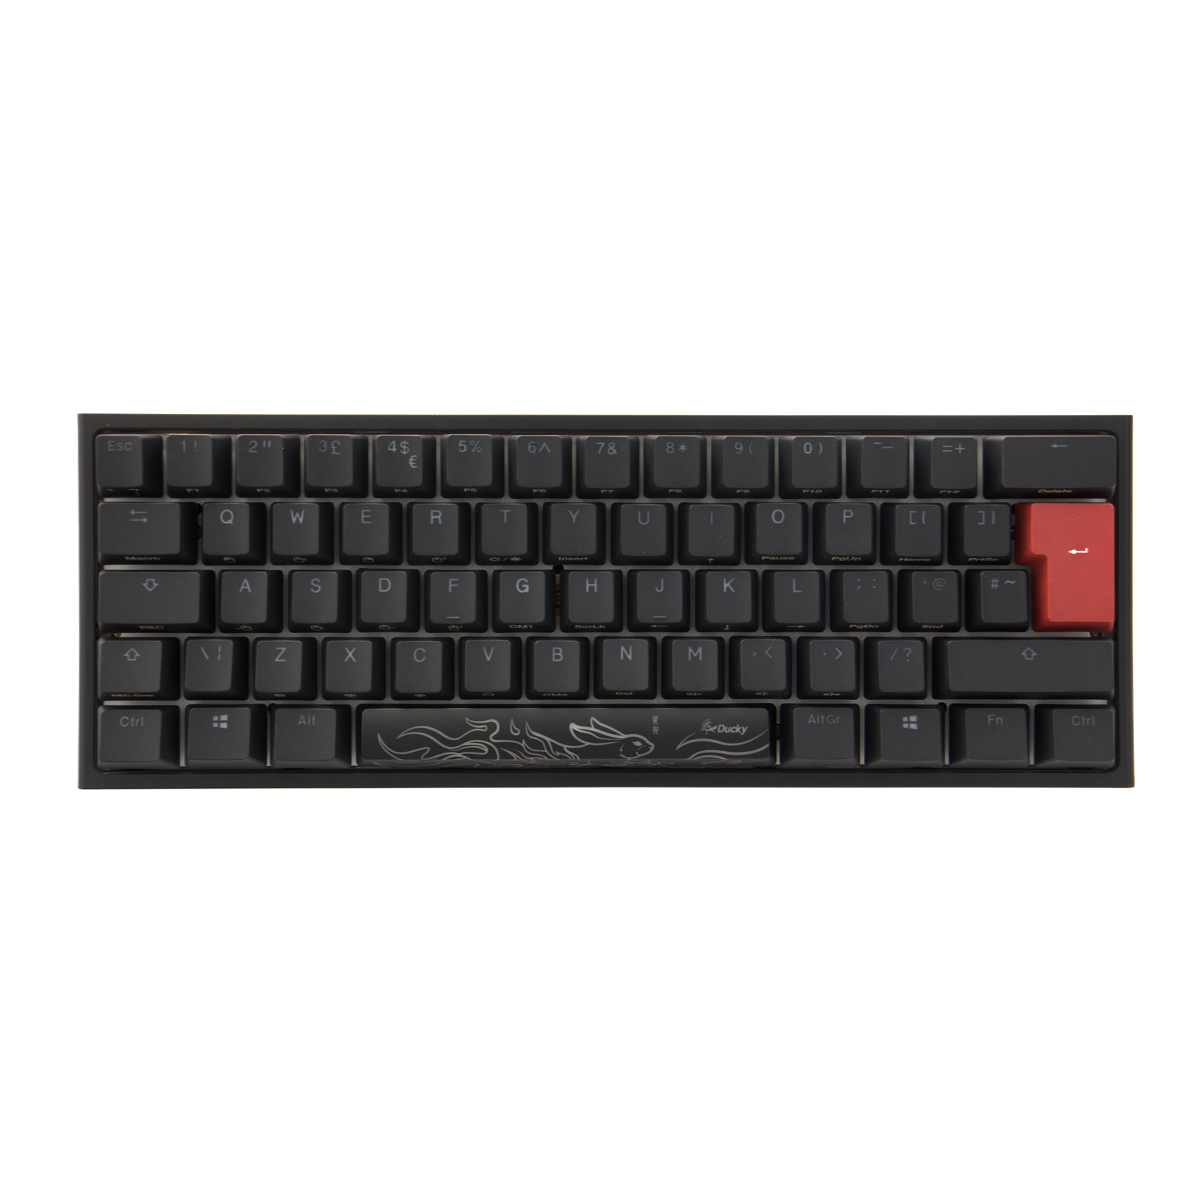 Ducky One 2 Pro Mini 60% Mechanical Gaming Keyboard Black MX Cherry Brown Switch - UK Layout